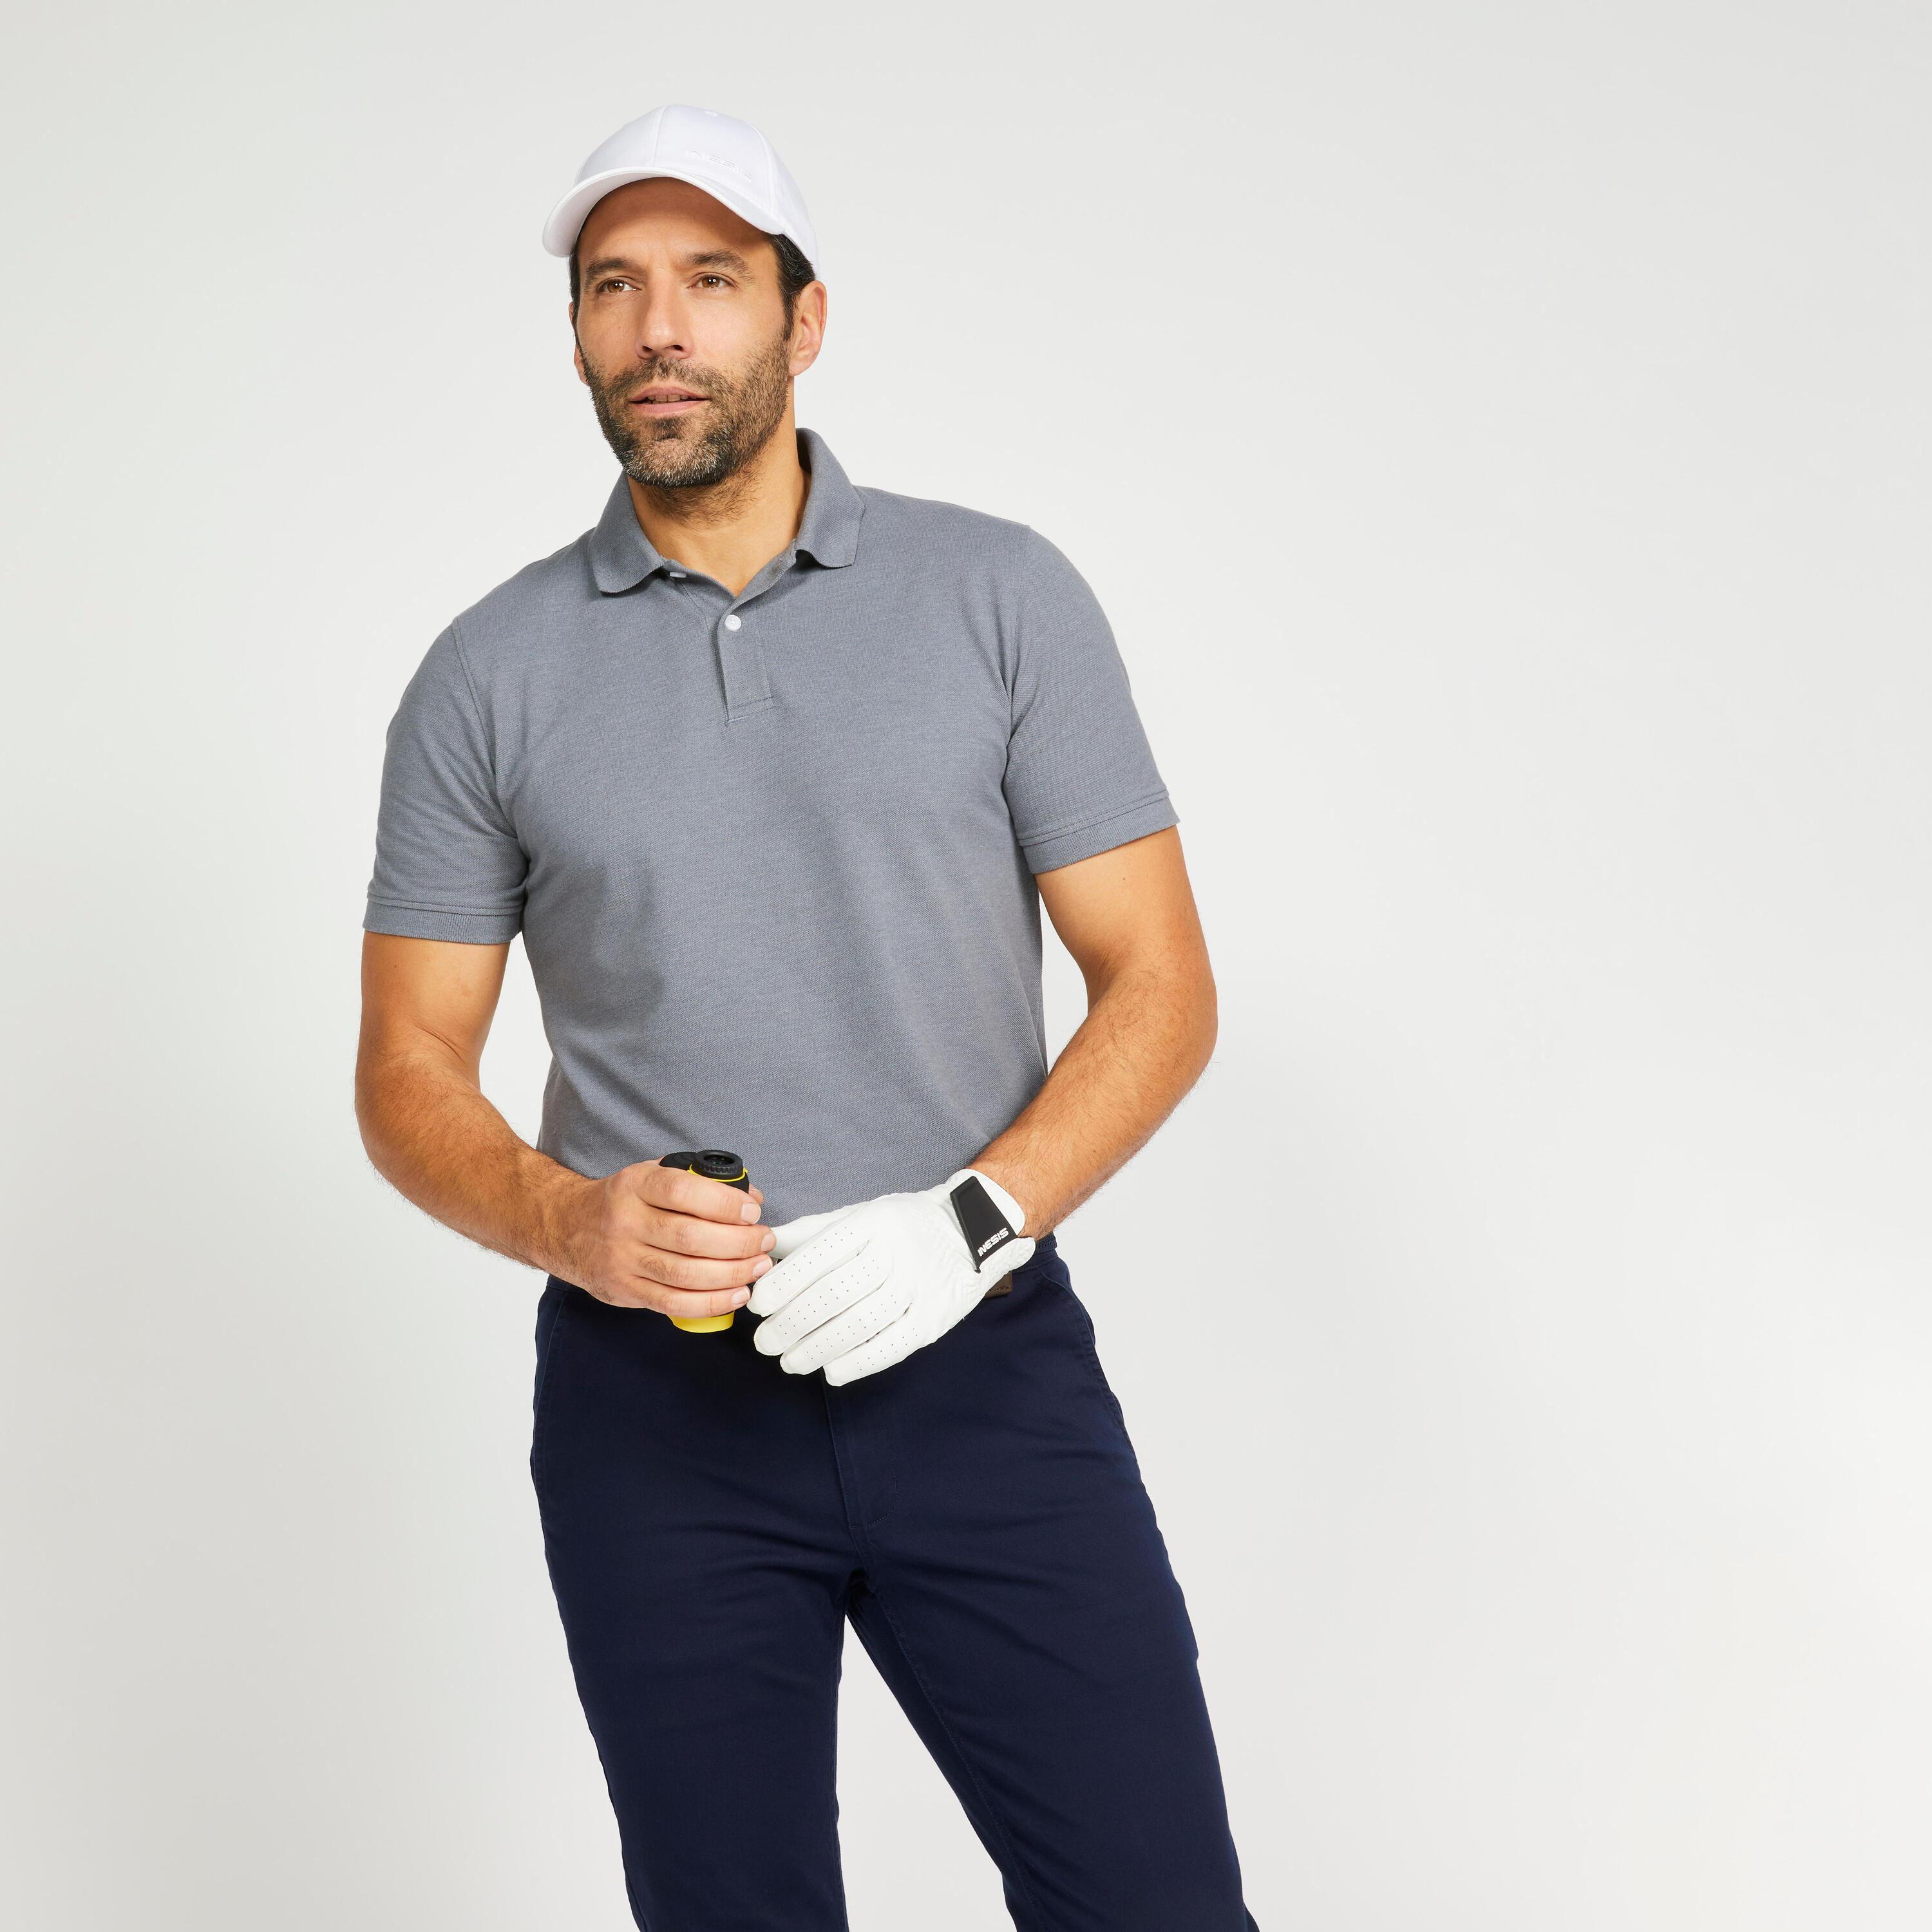 INESIS Men's short-sleeved golf polo shirt - MW500 dark grey